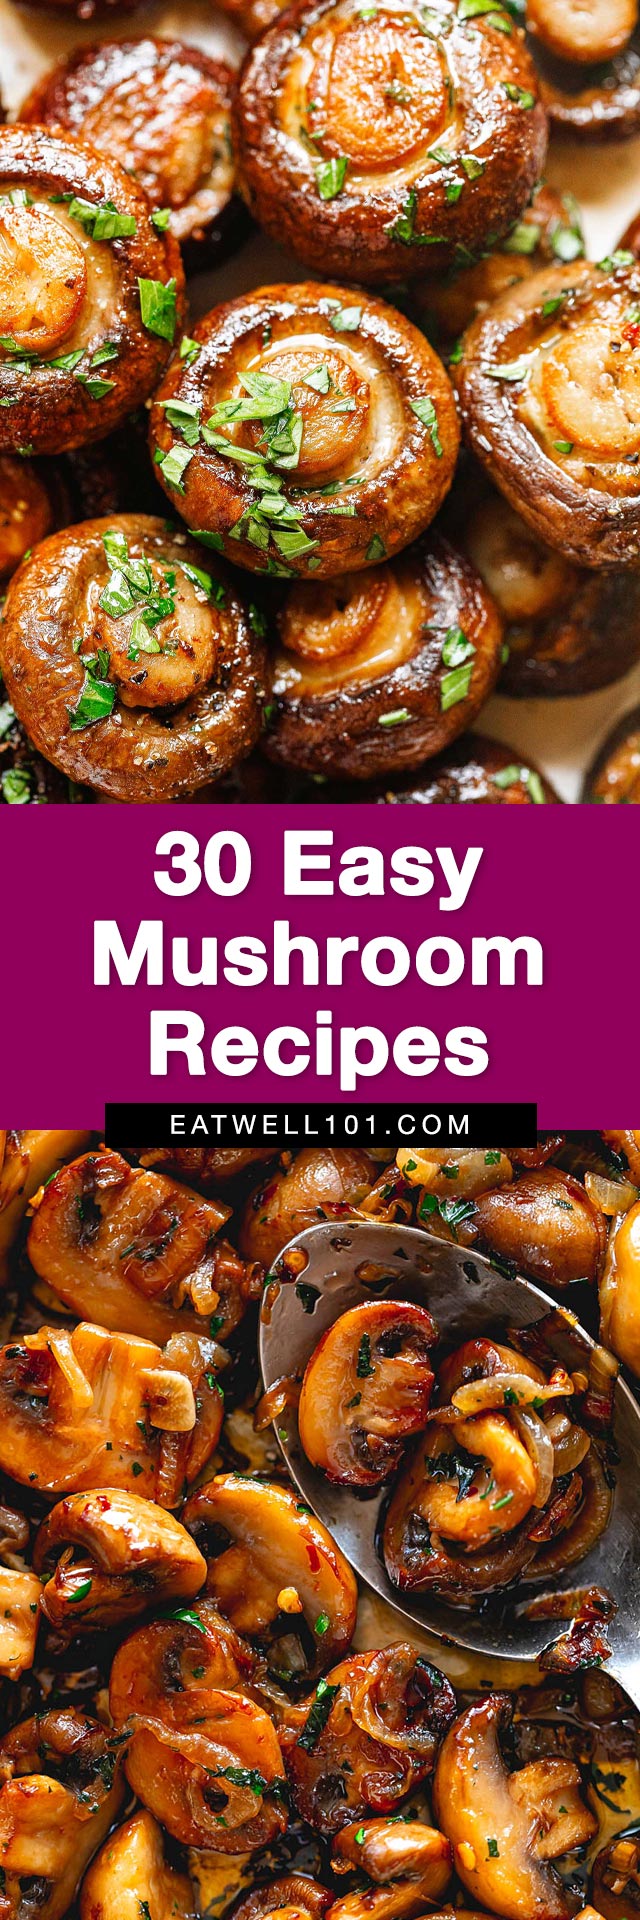 30 Best Mushroom Recipes for Dinner - #mushroom #recipes #eatwell101 - Enjoy our best mushroom recipes: from stuffed mushrooms to mushroom pasta, you'll love these easy recipes with mushrooms!